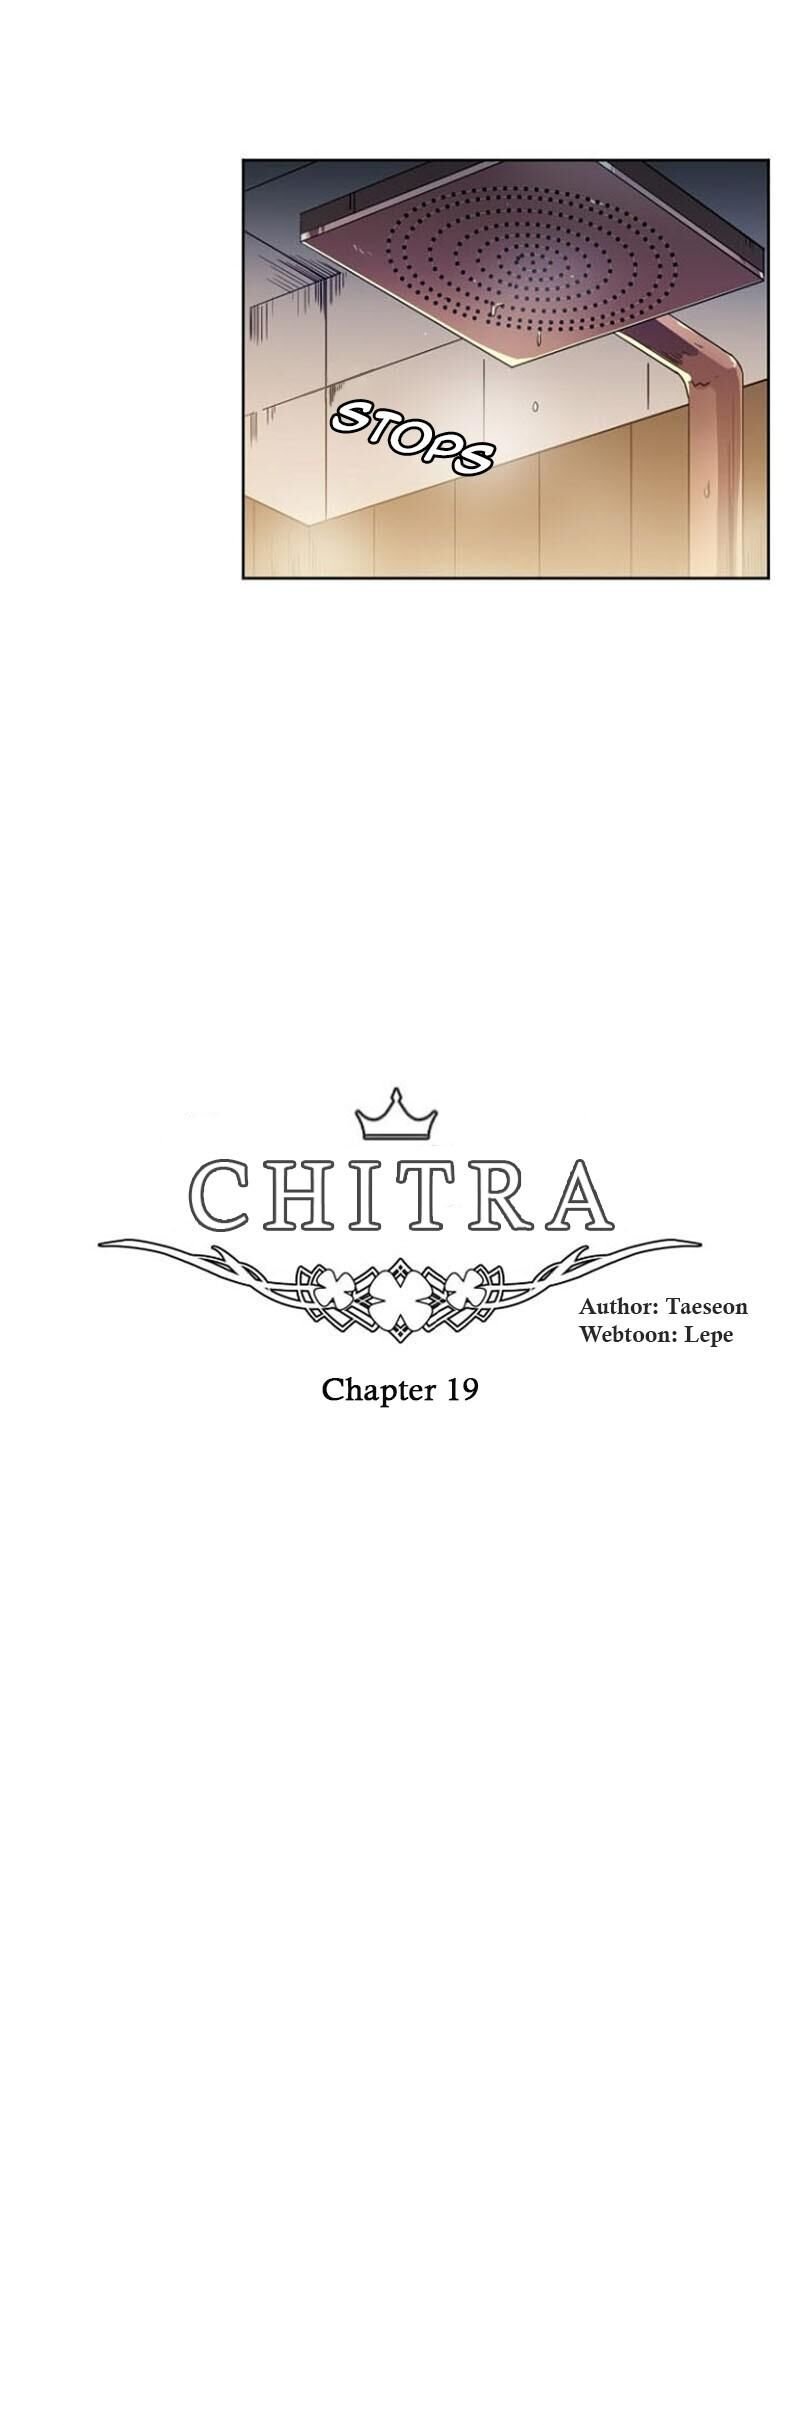 Chitra chapter 19